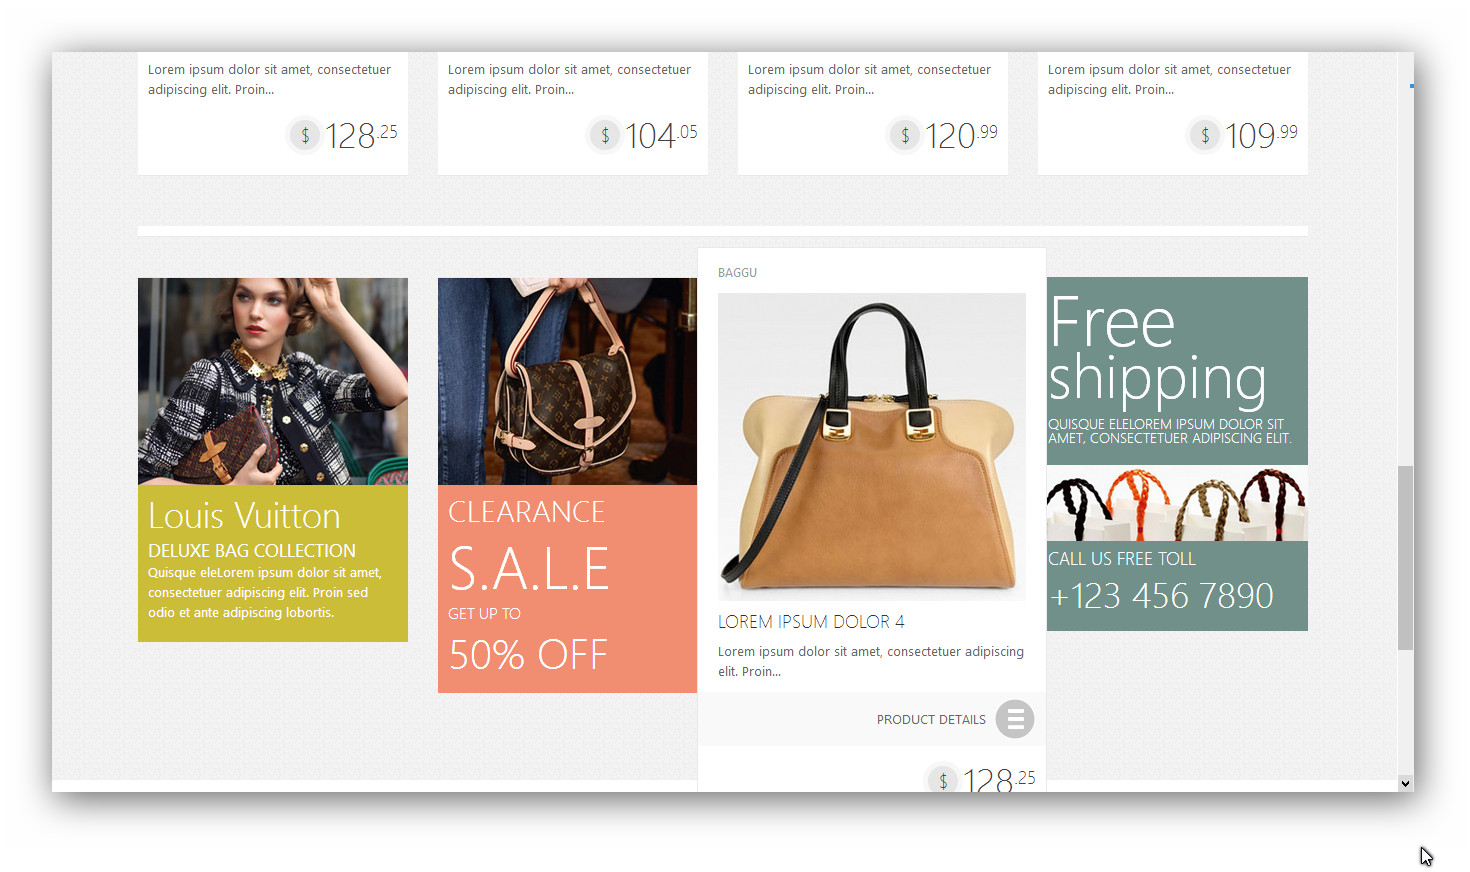 Online store selling women's handbags